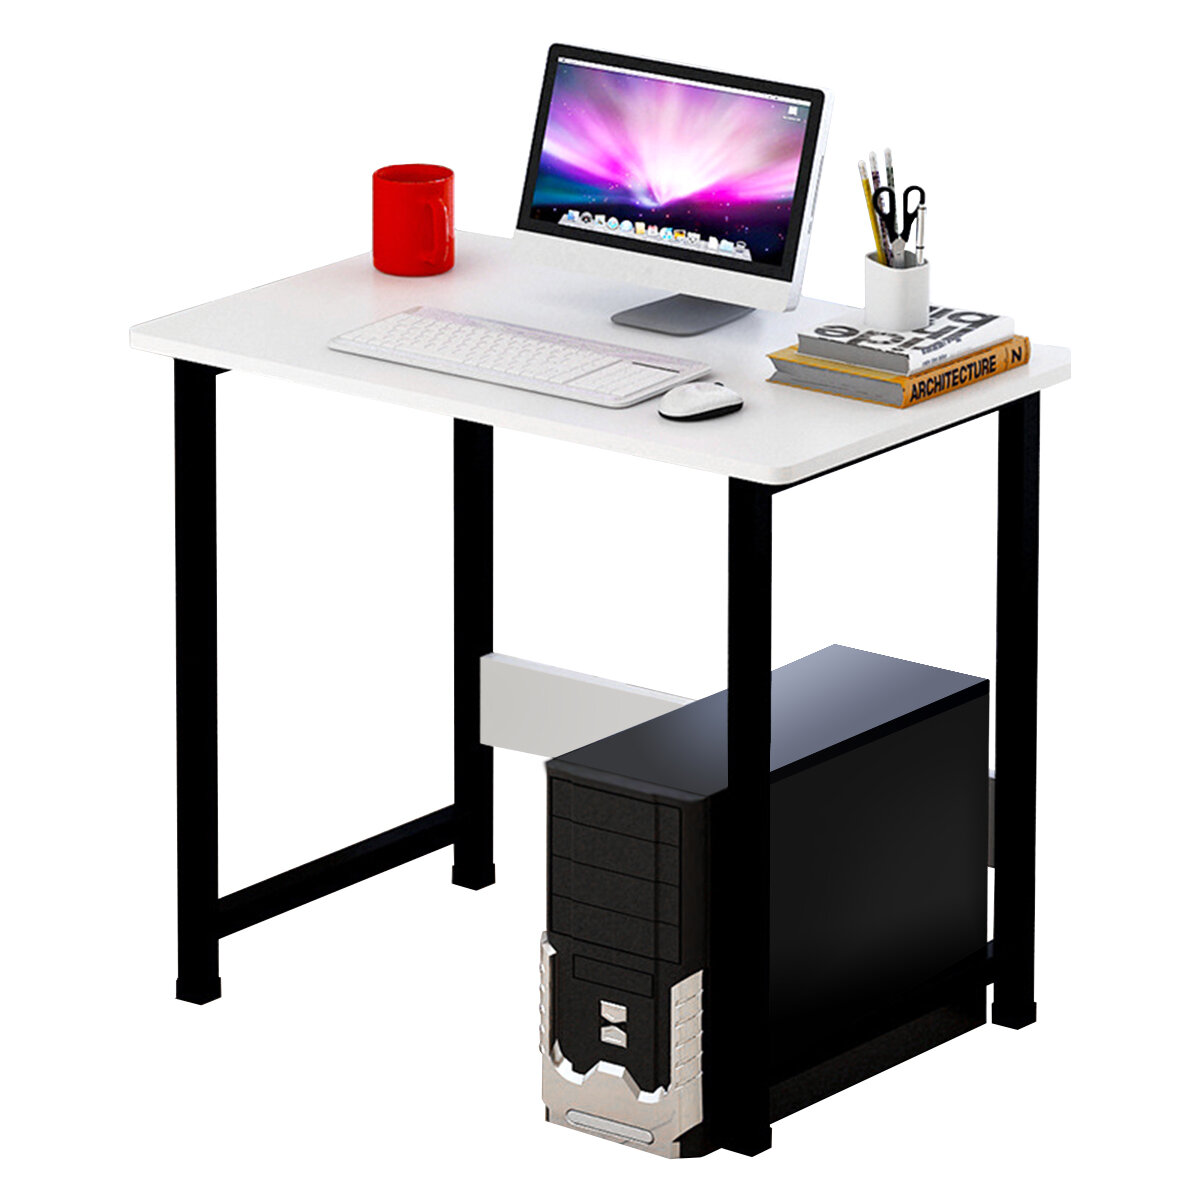 Image of Wooden Computer Laptop Desk Modern Table Study Desk Office Furniture PC Workstation for Home Office Studying Living room